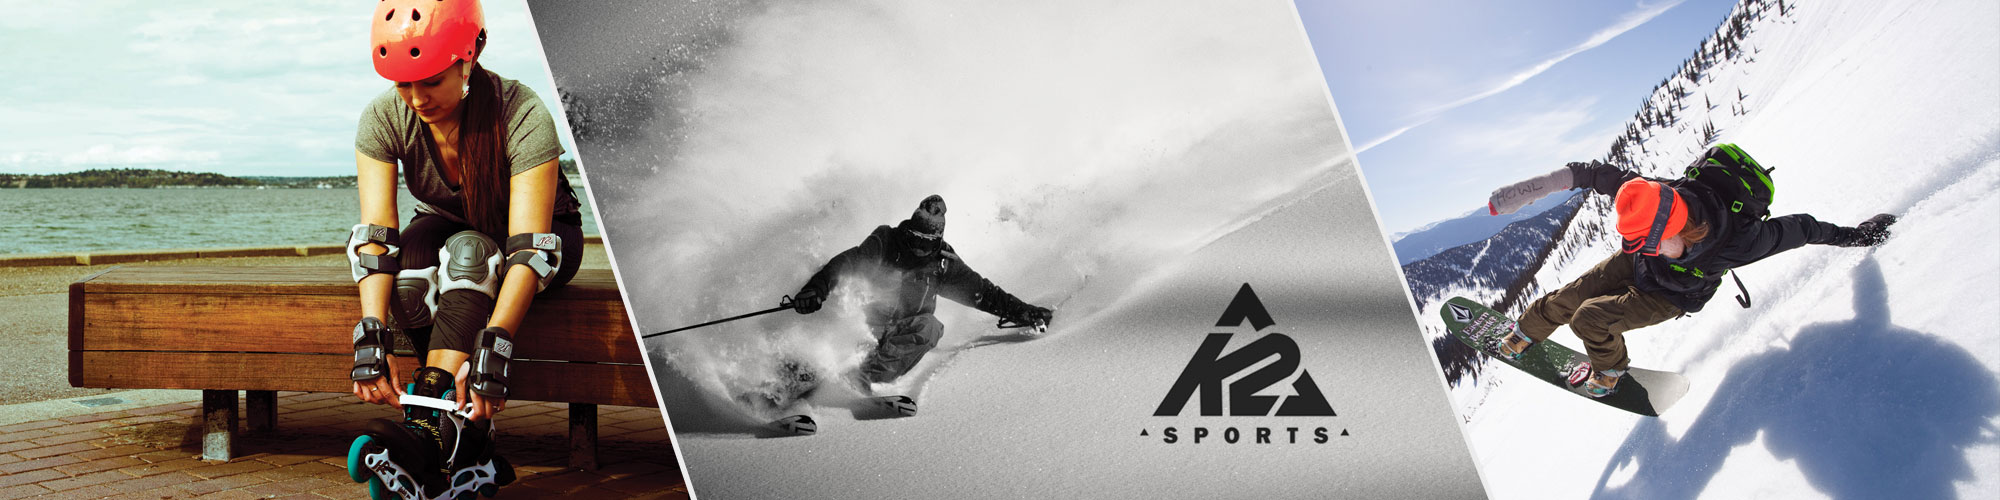 K2 Sports Inline Skating, Skiing, and Snowboarding